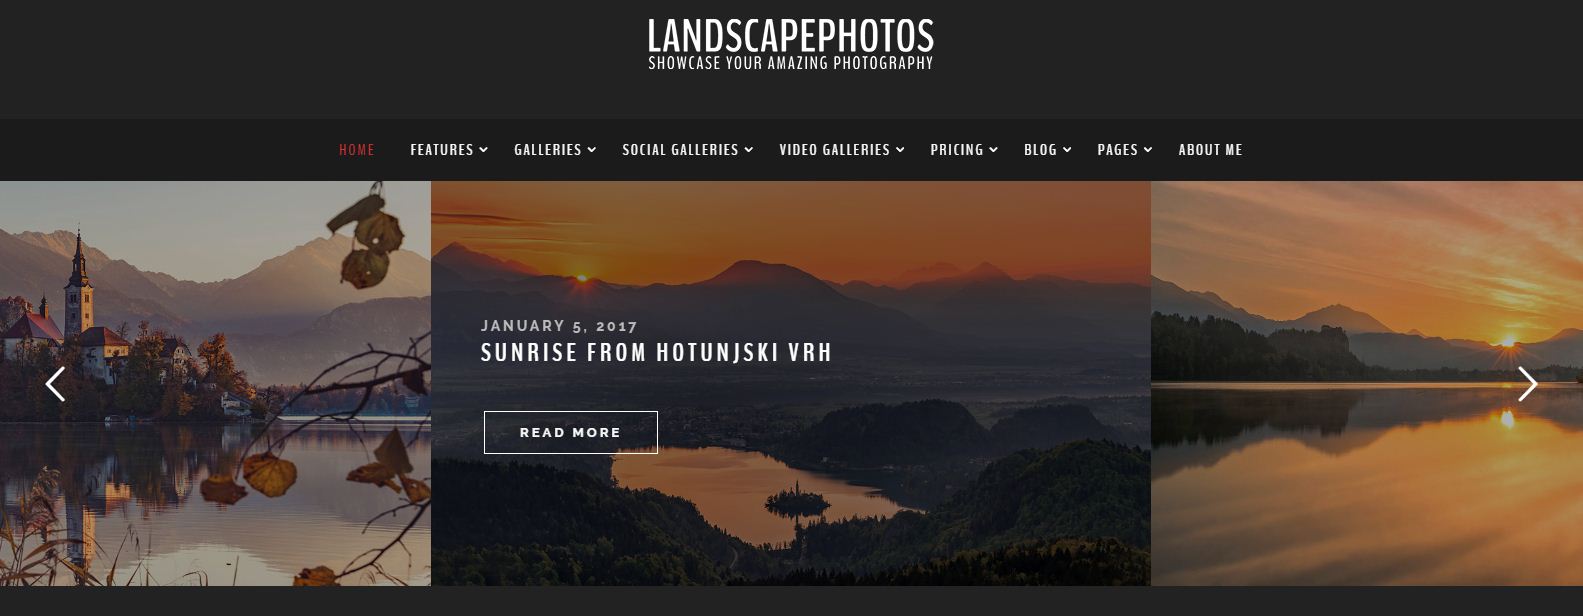 landscapephotos wordpress theme